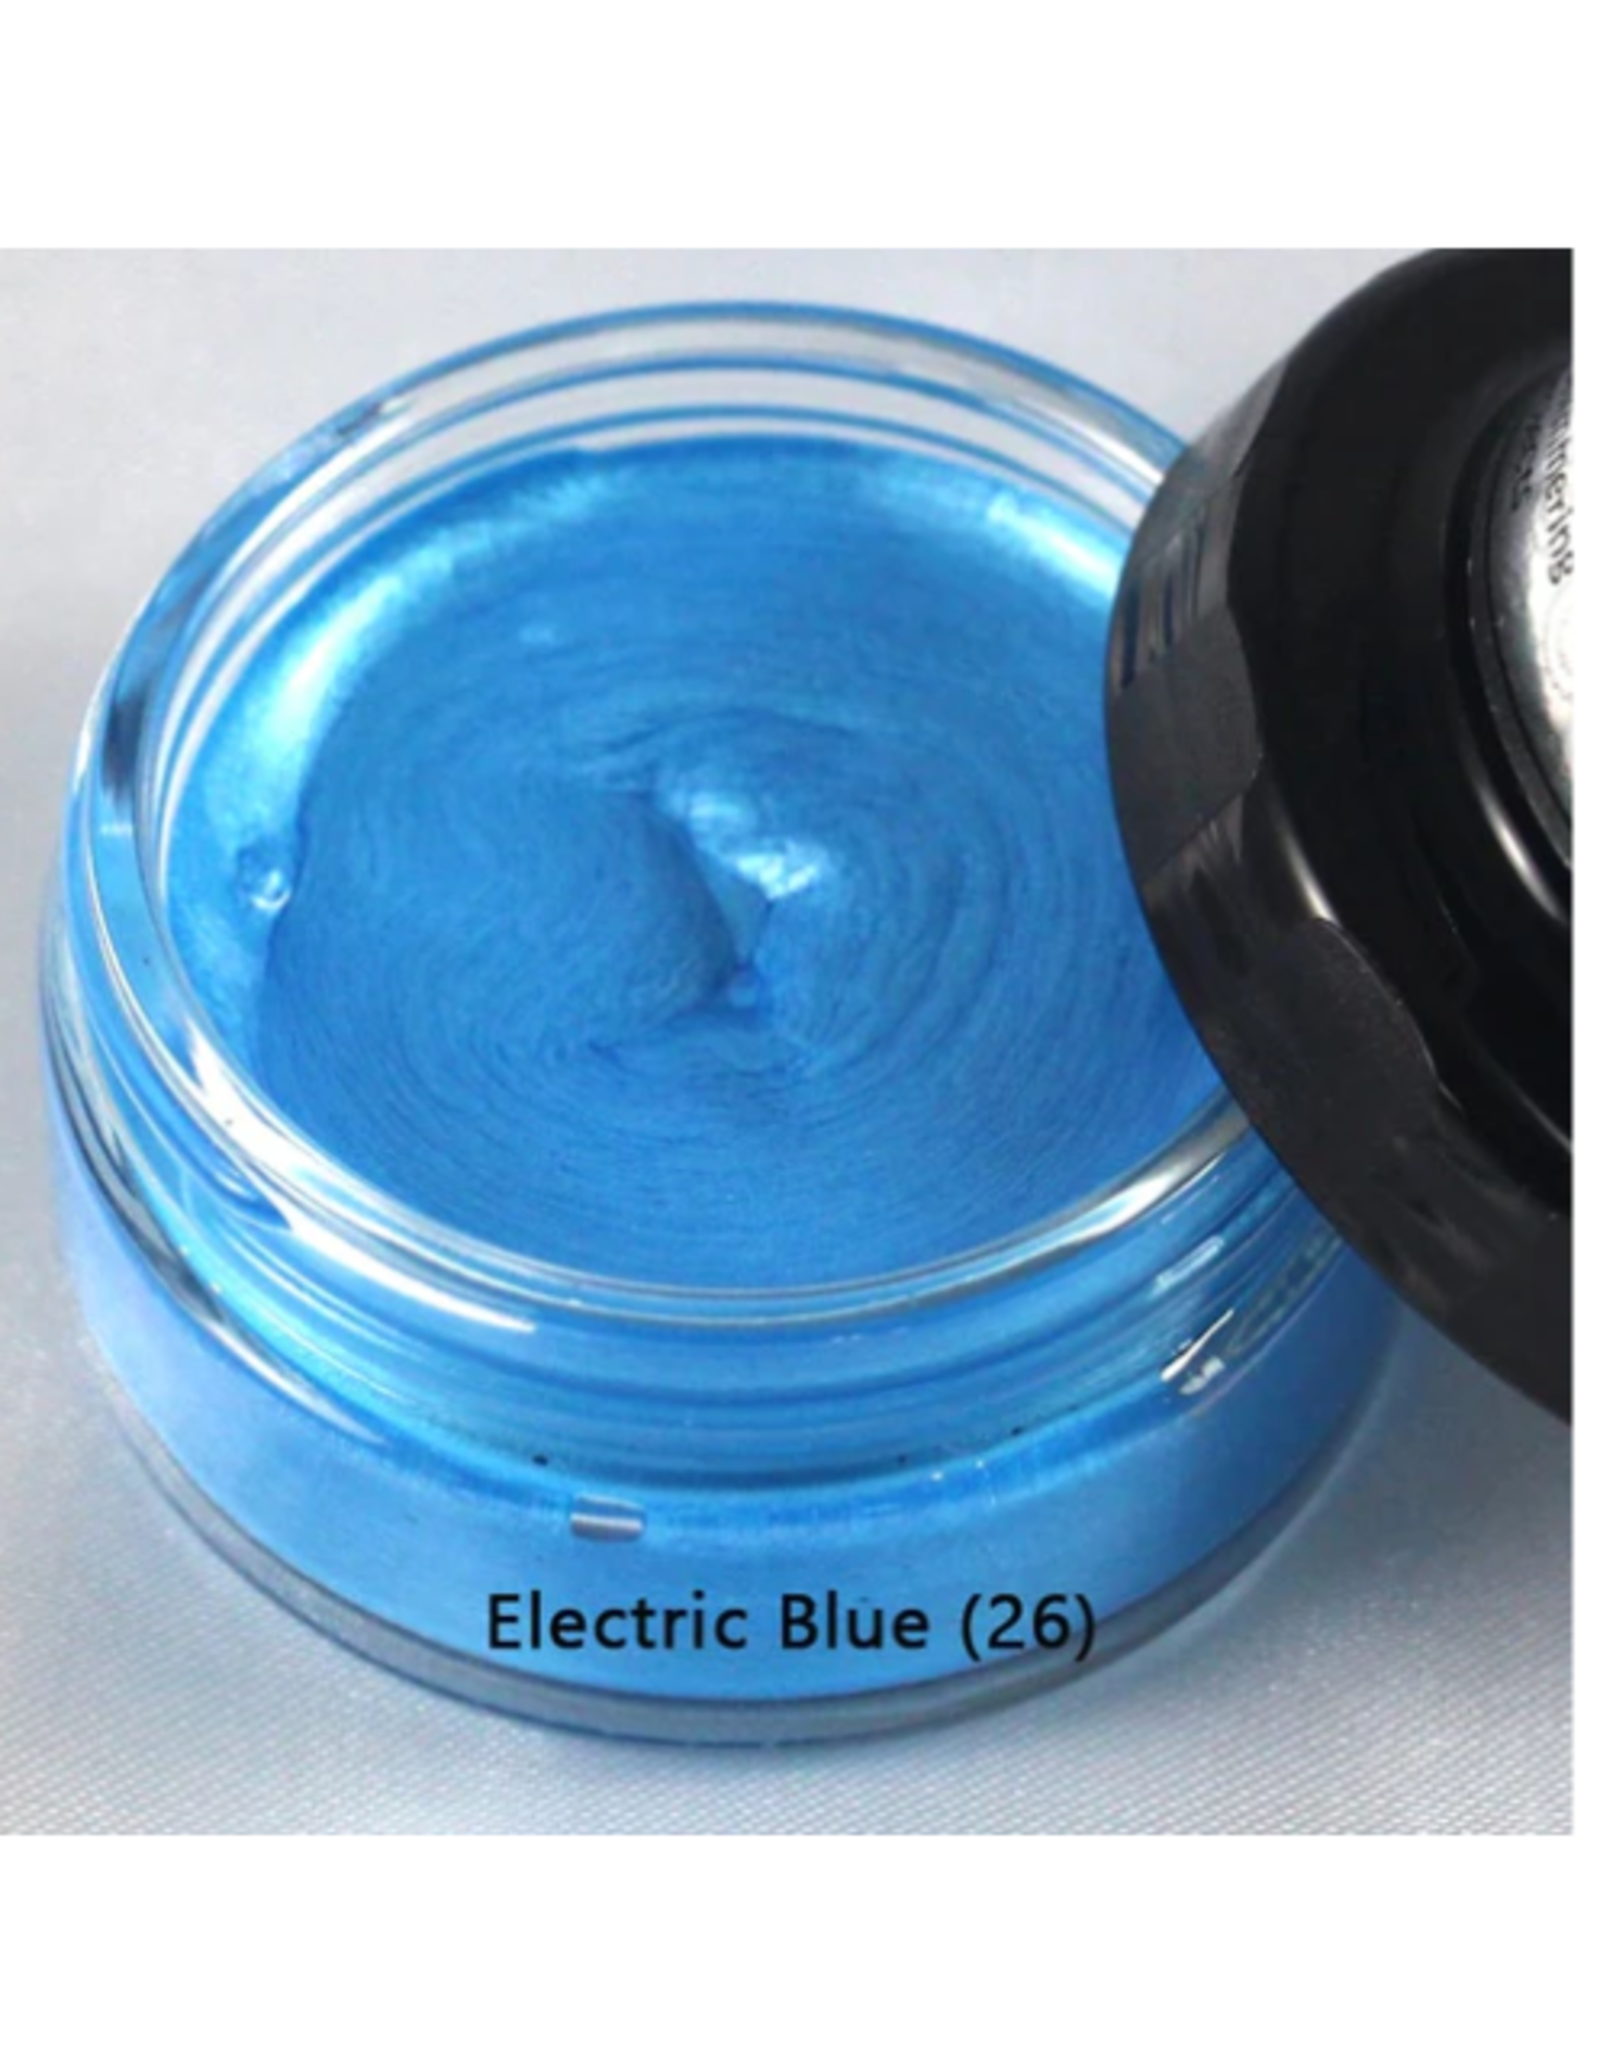 CREATIVE EXPRESSIONS CREATIVE EXPRESSIONS COSMIC SHIMMER ELECTRIC BLUE METALLIC GILDING POLISH 50ML